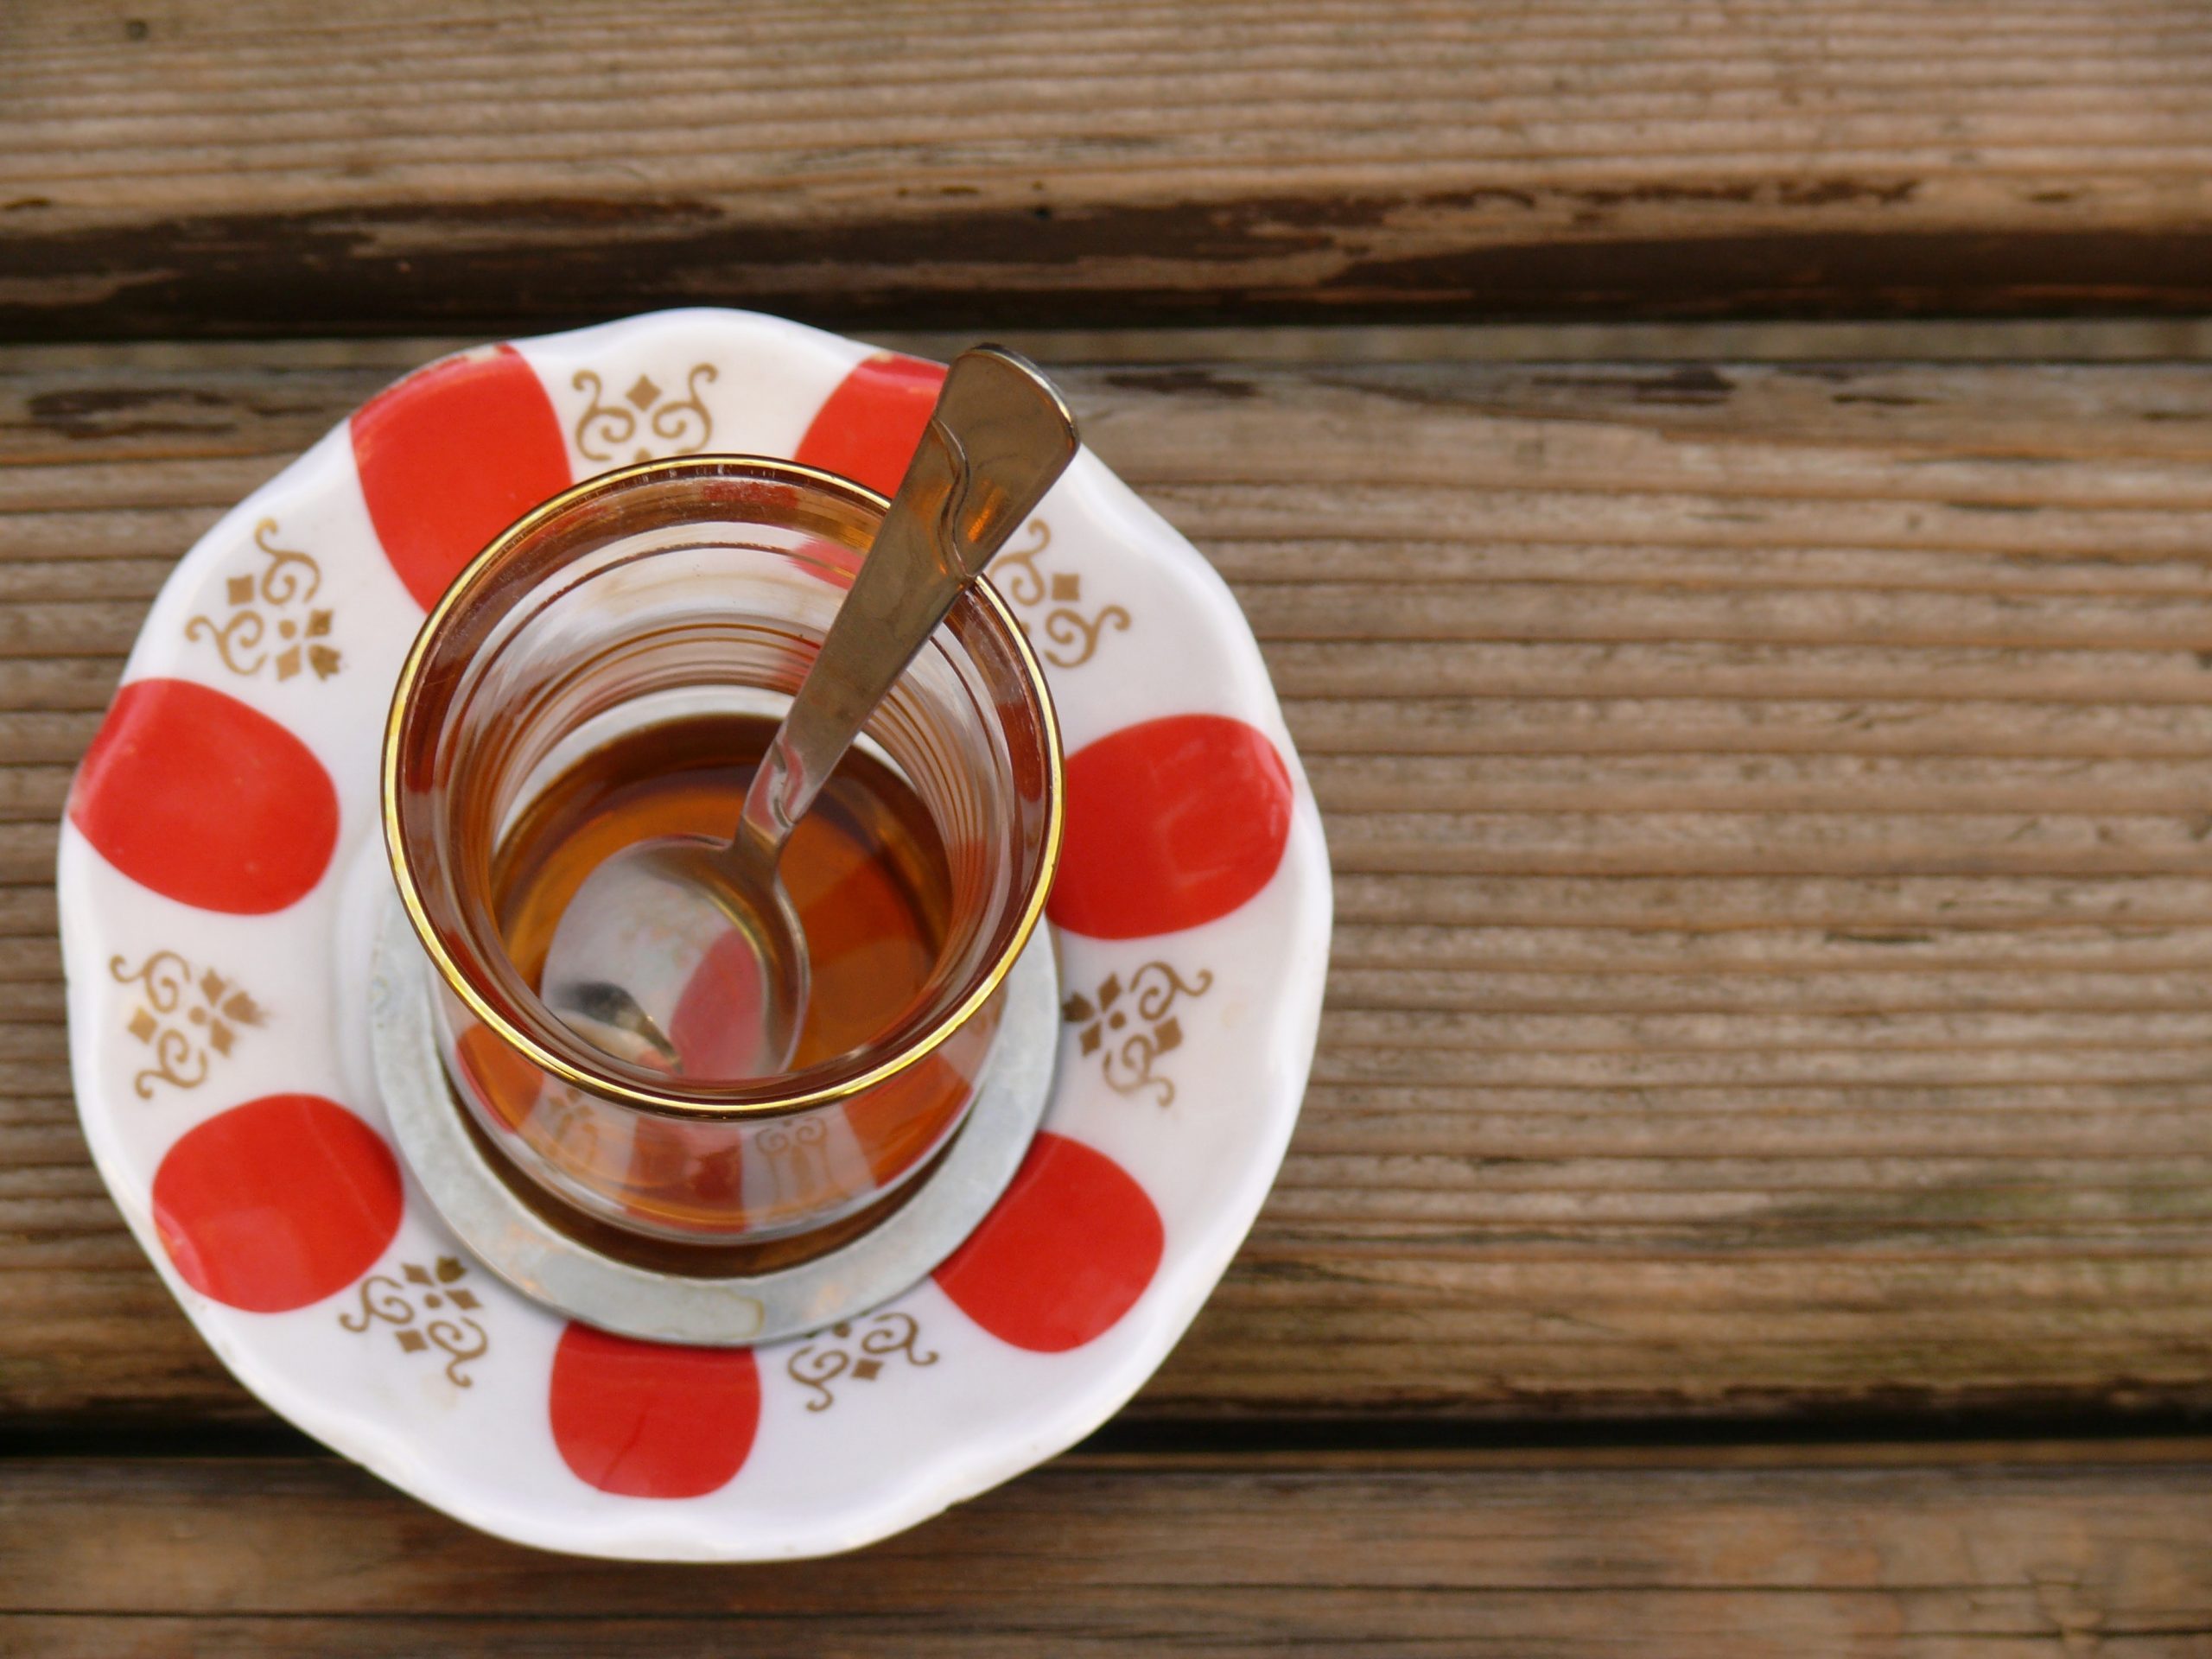 Black tea as Turkish souvenirs